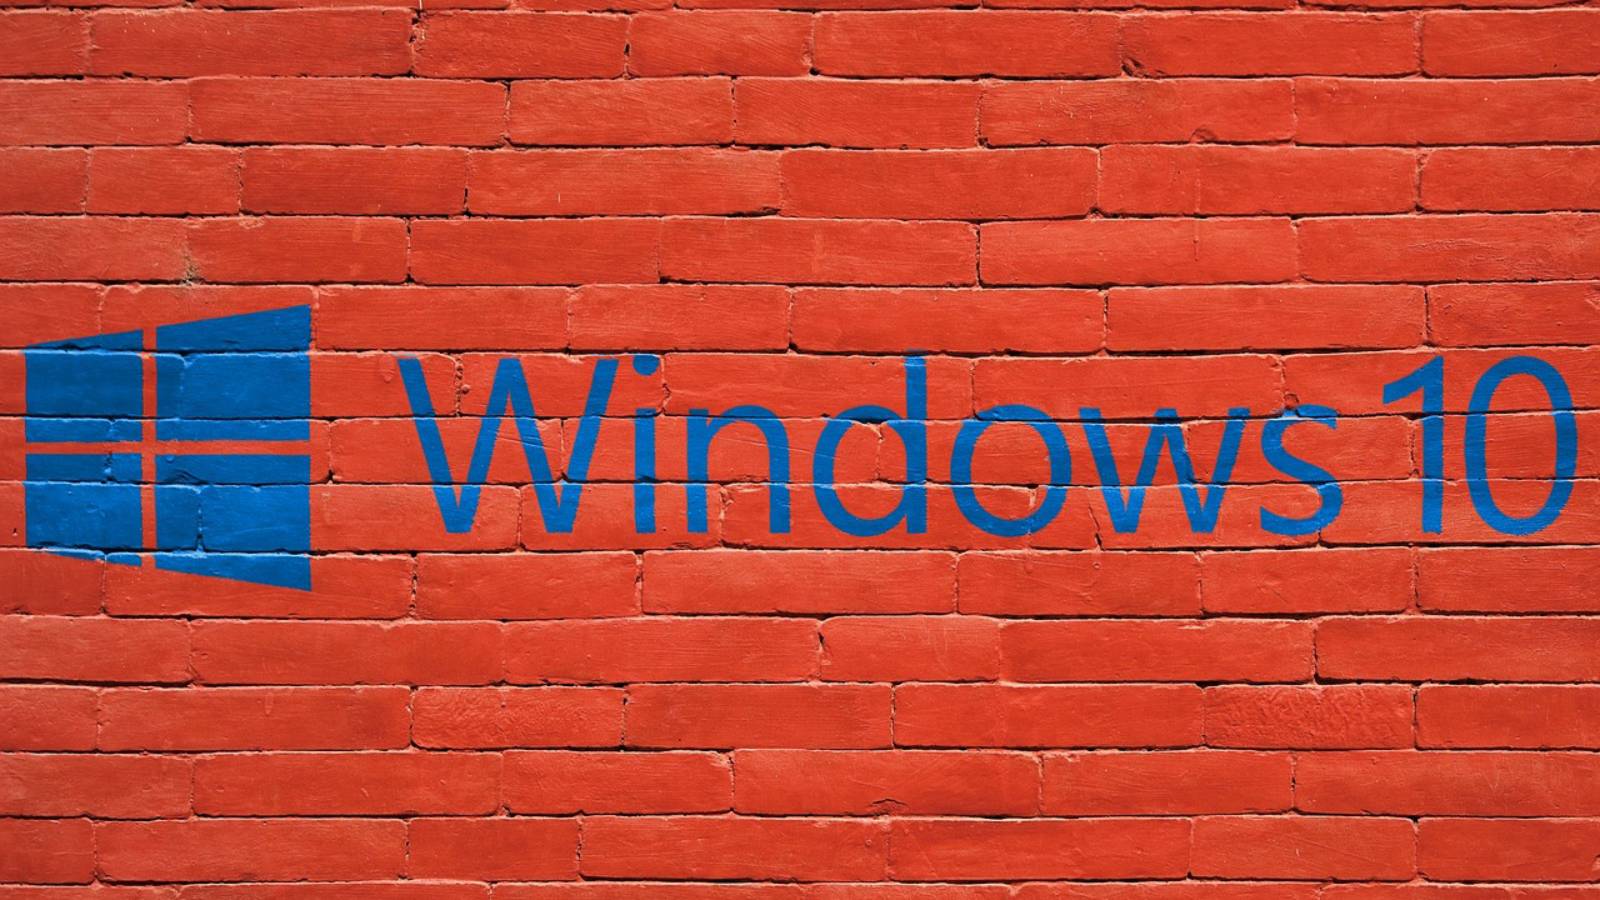 Windows 10-Problem